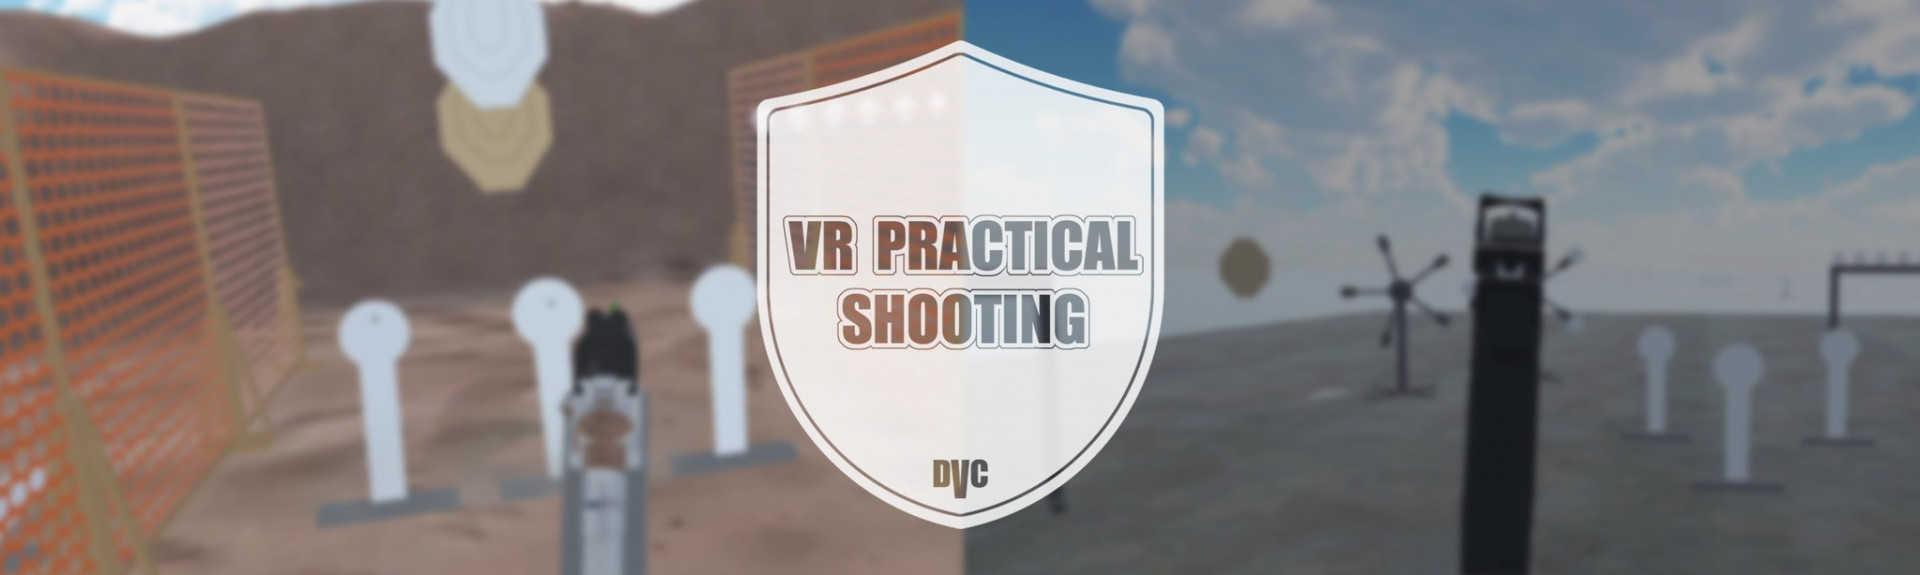 VR Practical Shooting